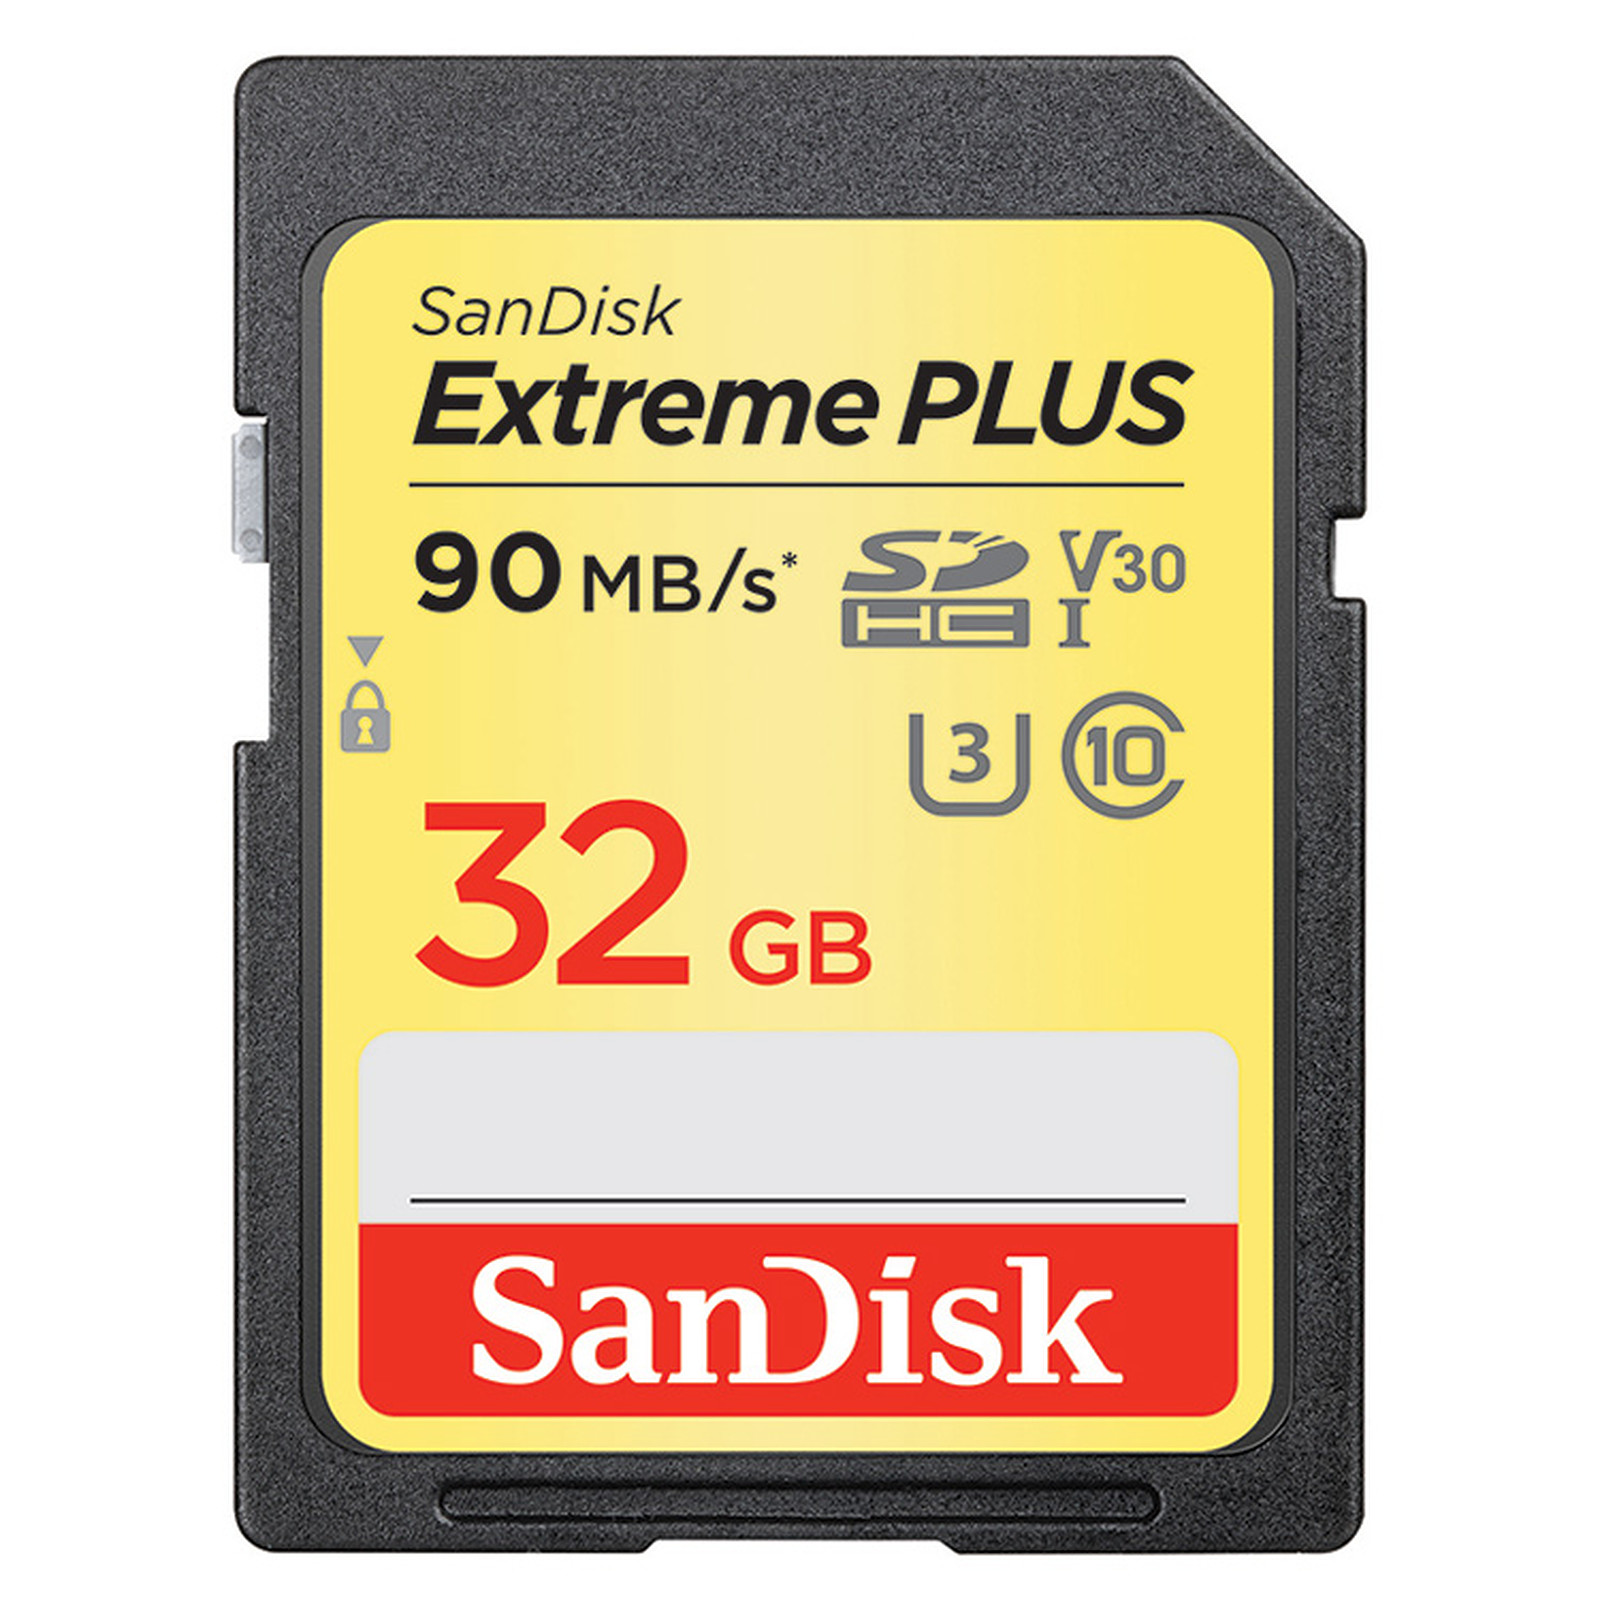 SanDisk Carte memoire SDHC Extreme PLUS UHS-1 U3 V30 32 Go - Carte memoire Sandisk